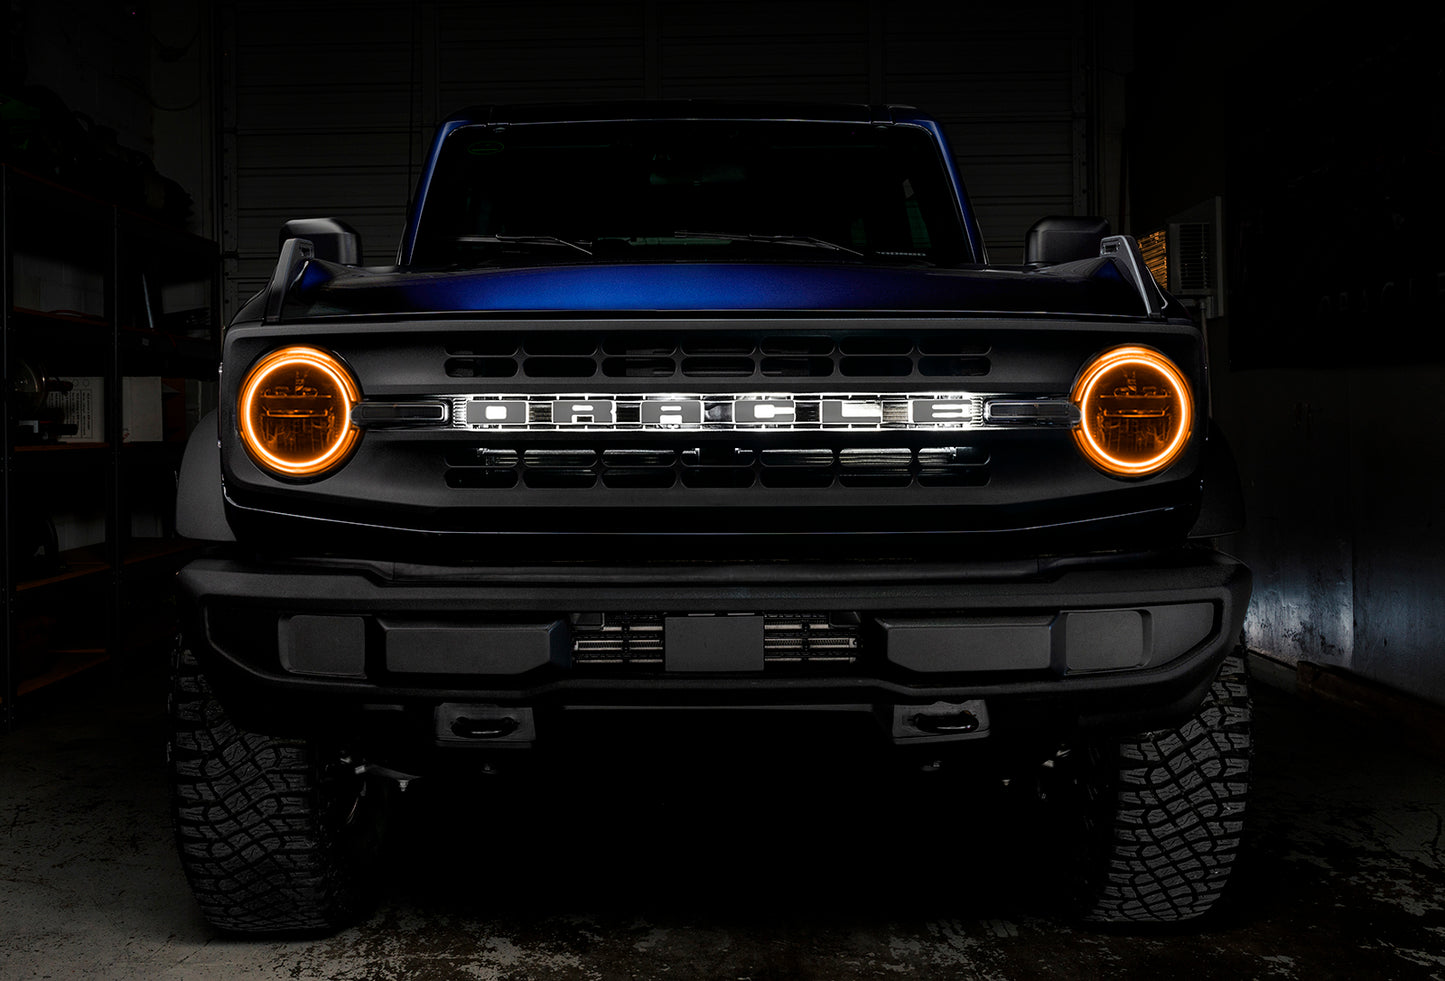 ORACLE Lighting 1470-504 Fits Ford Bronco LED Headlight Halo Halo Kit - Base Headlights